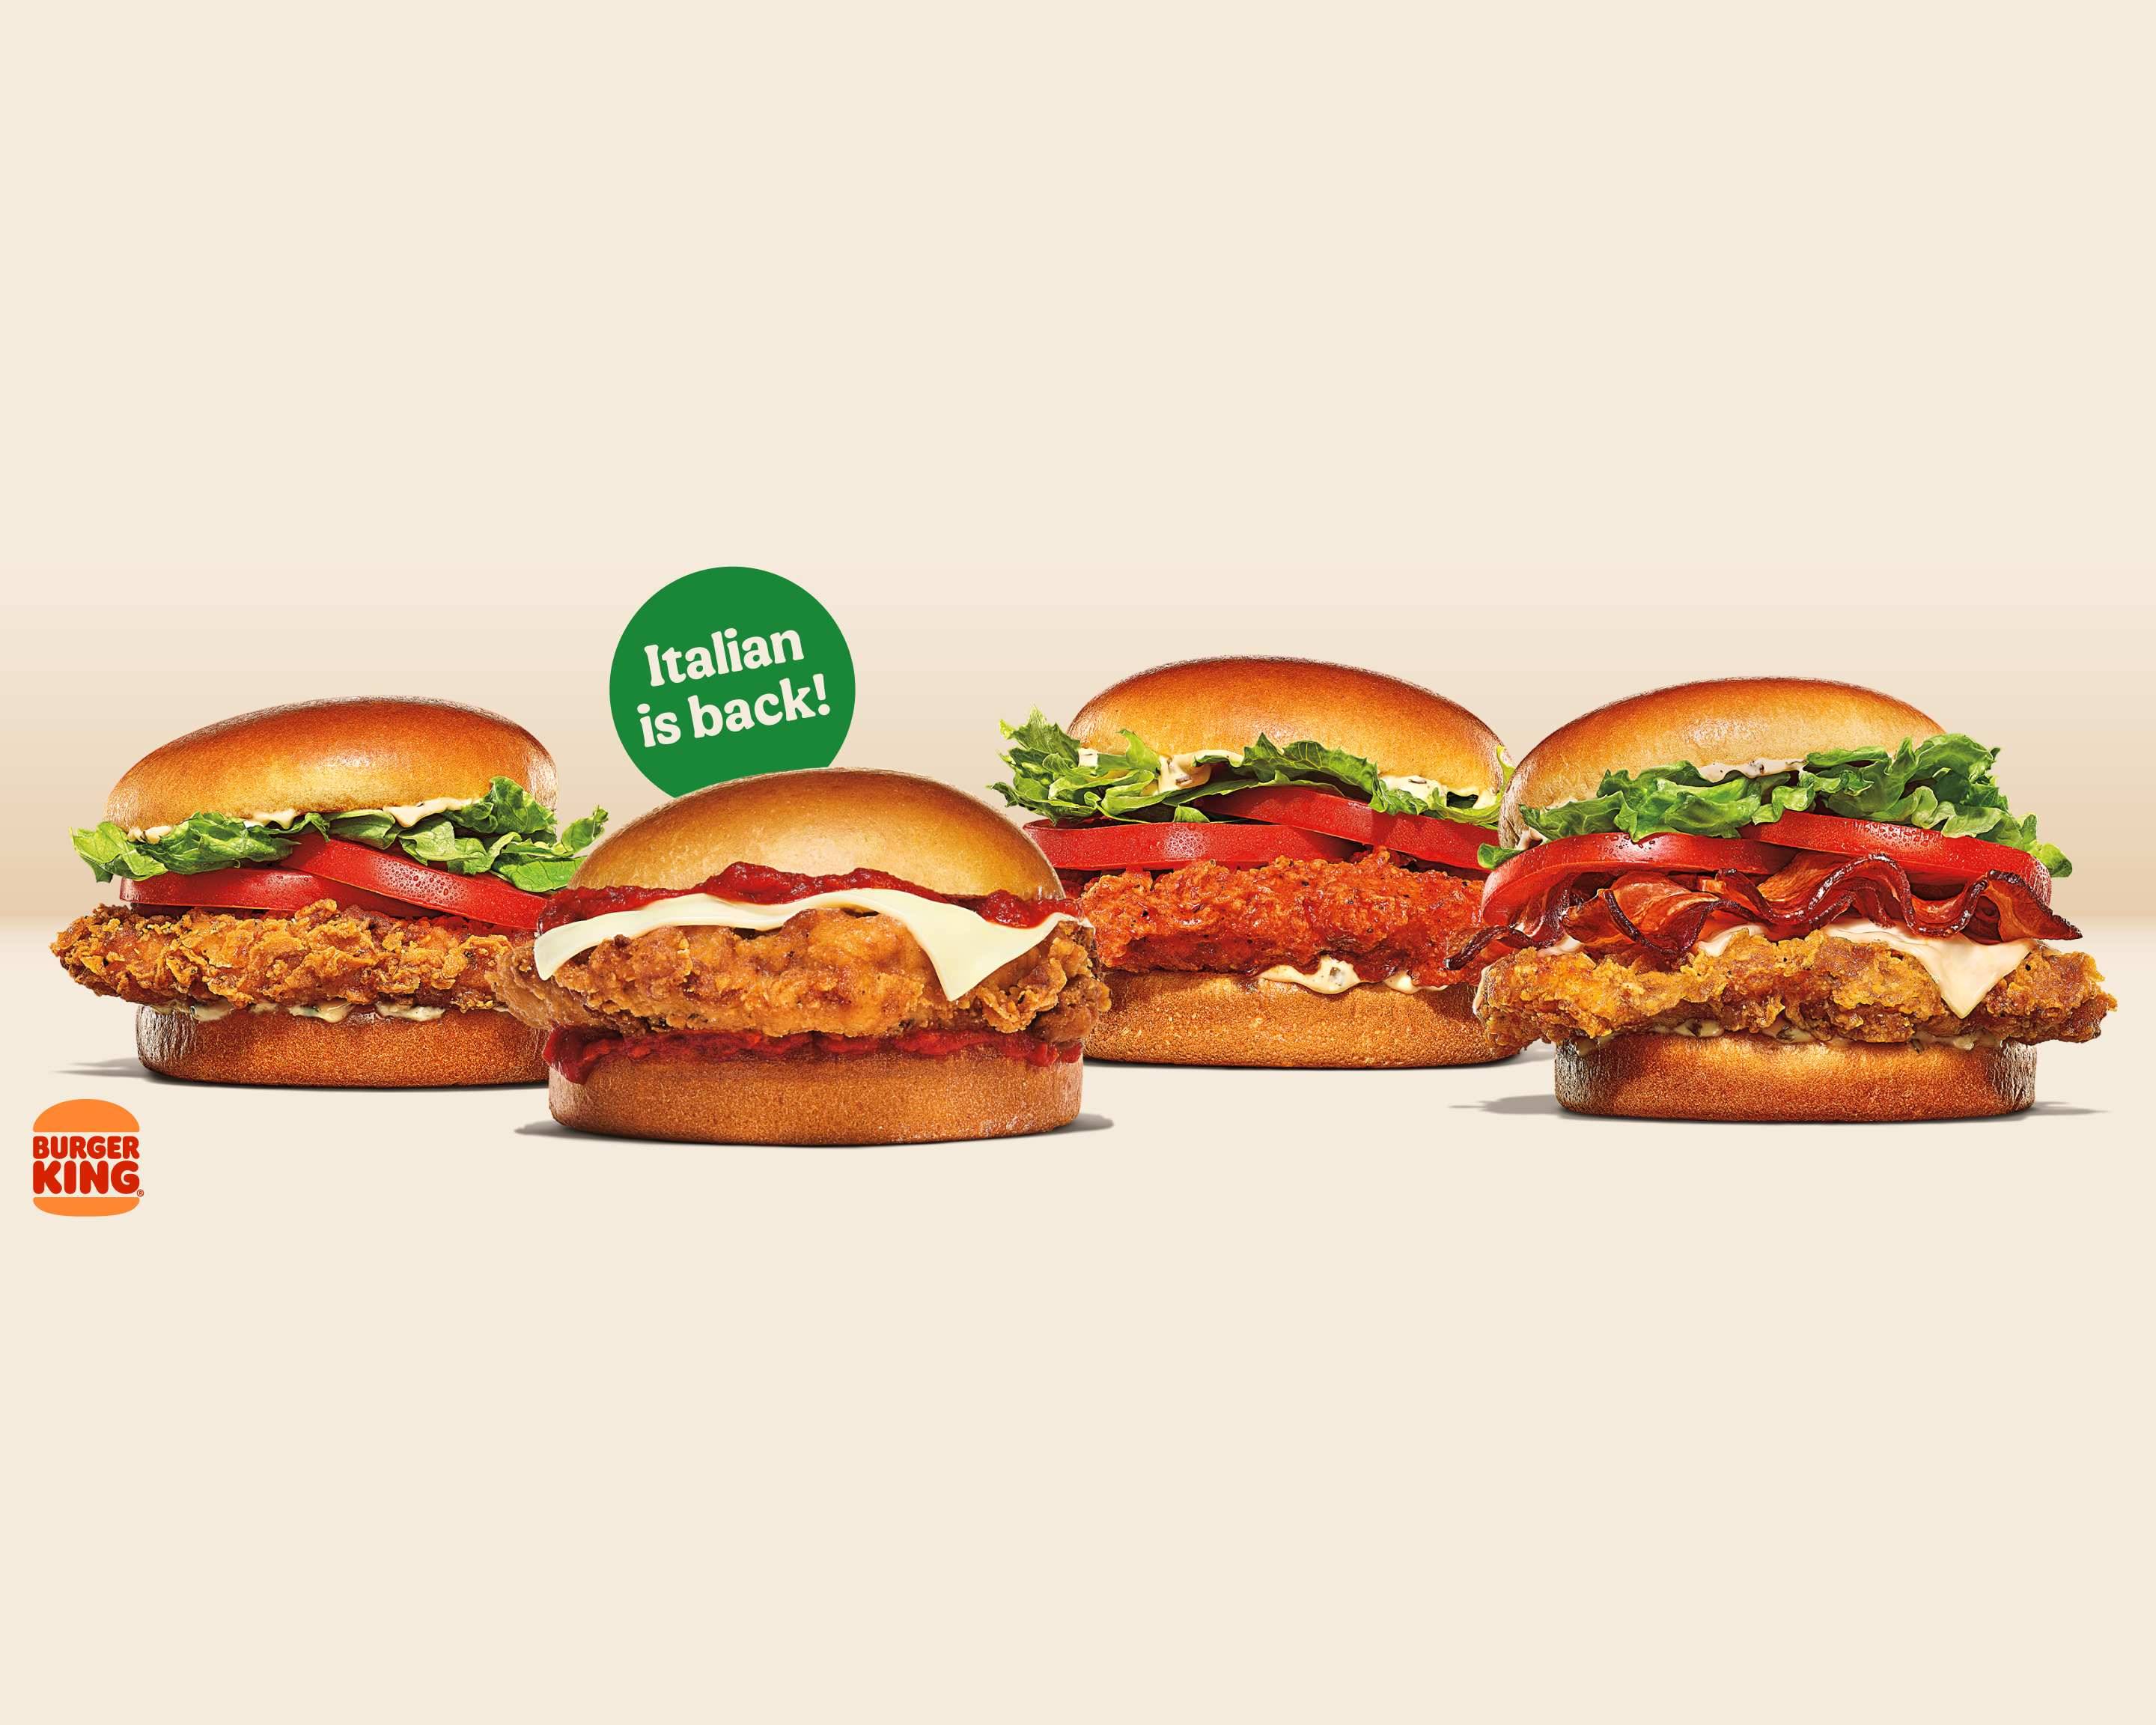 Burger King Restaurants Buy Any Original Chicken Sandwich, Get One Free  Deal